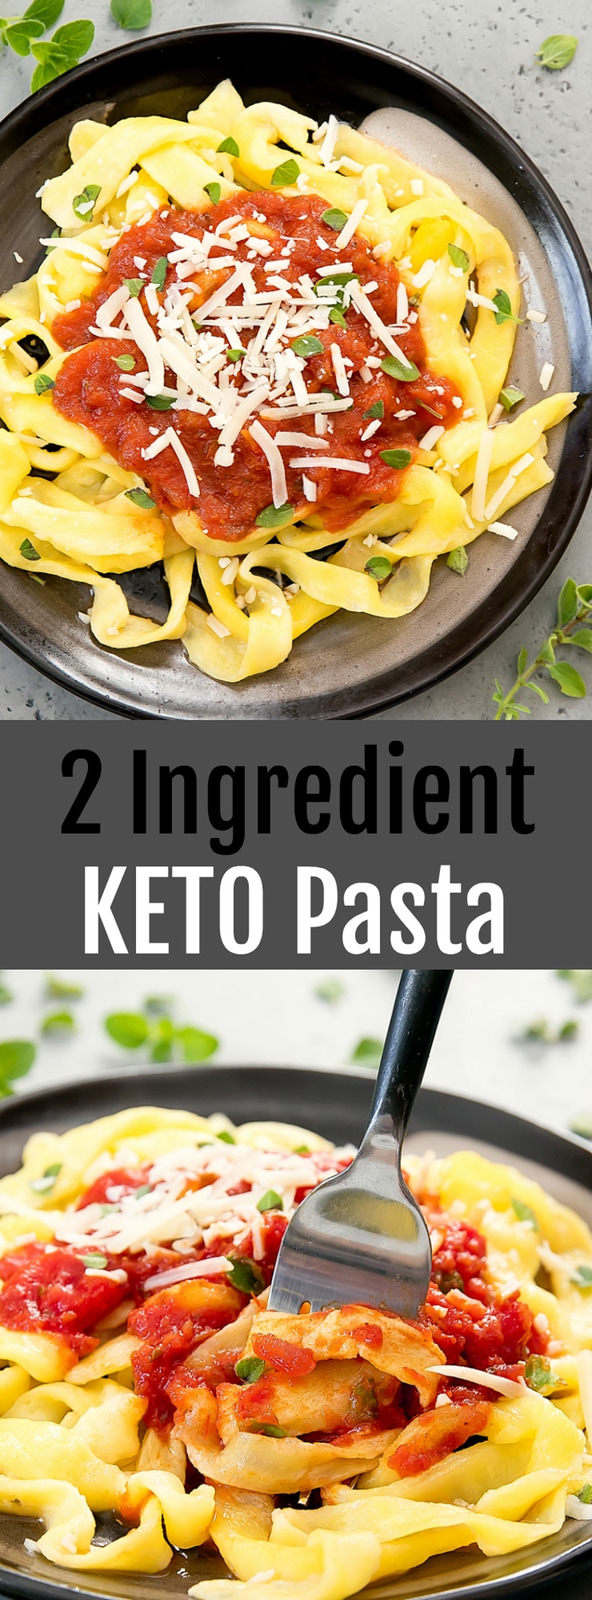 2 Ingredient Keto Pasta - Kirbie's Cravings